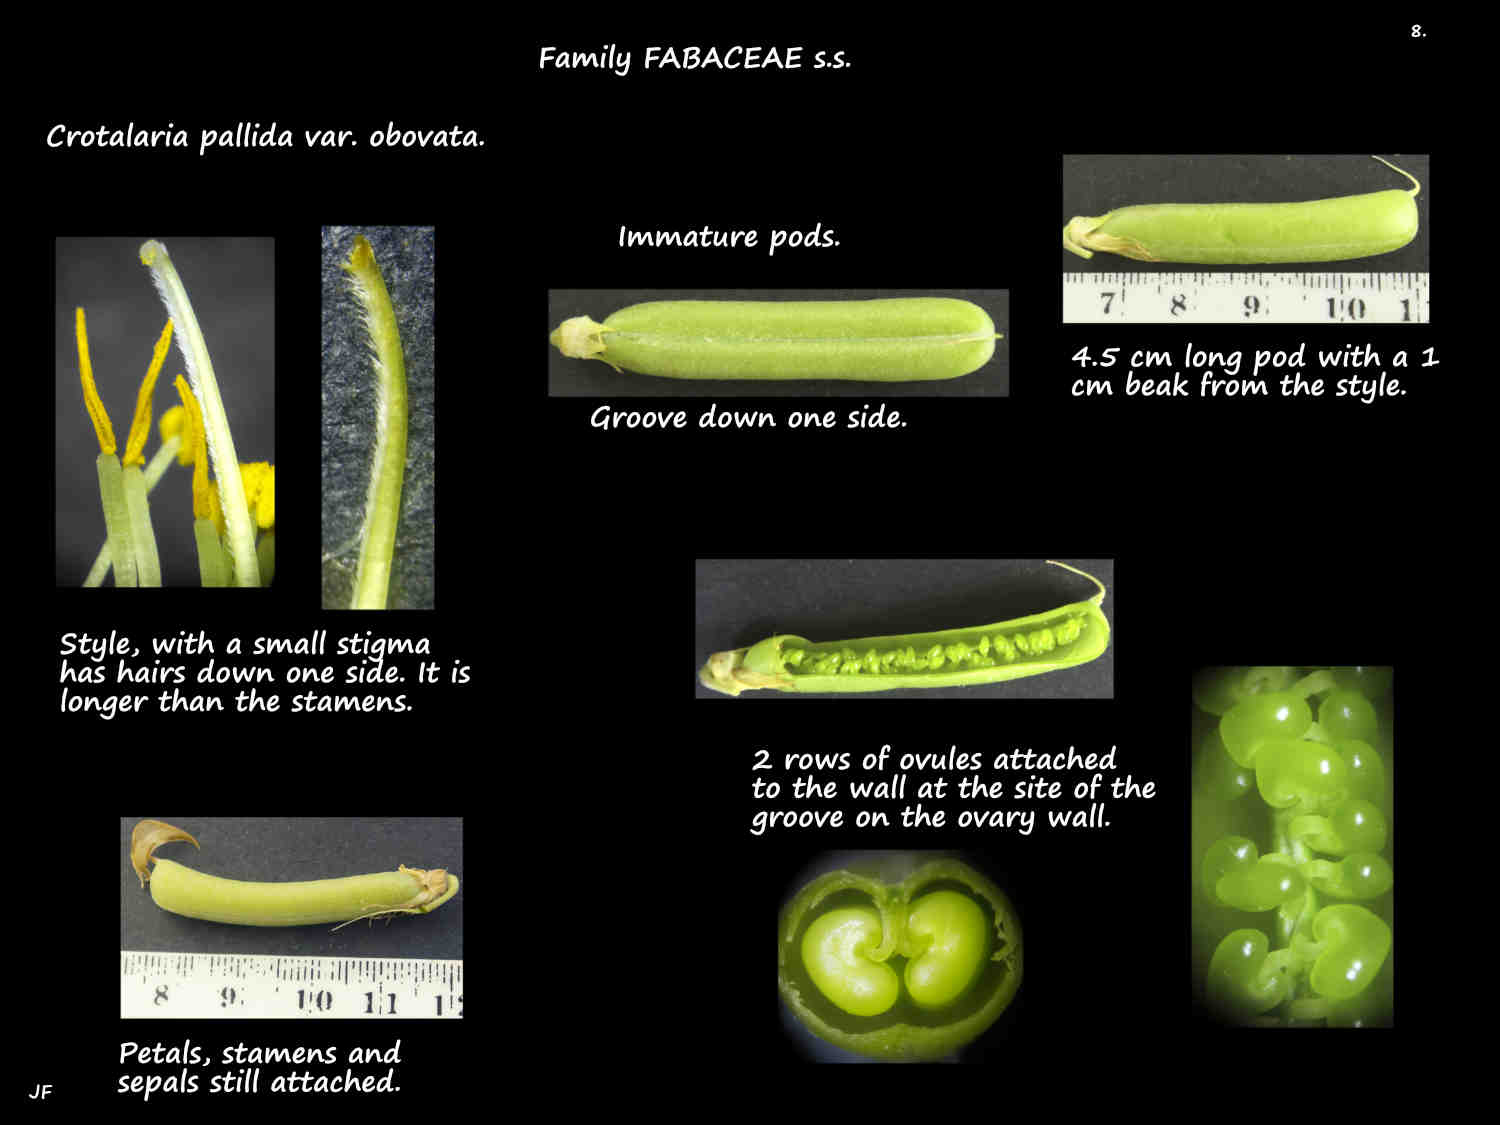 8 Crotalaria pallida ovary & style